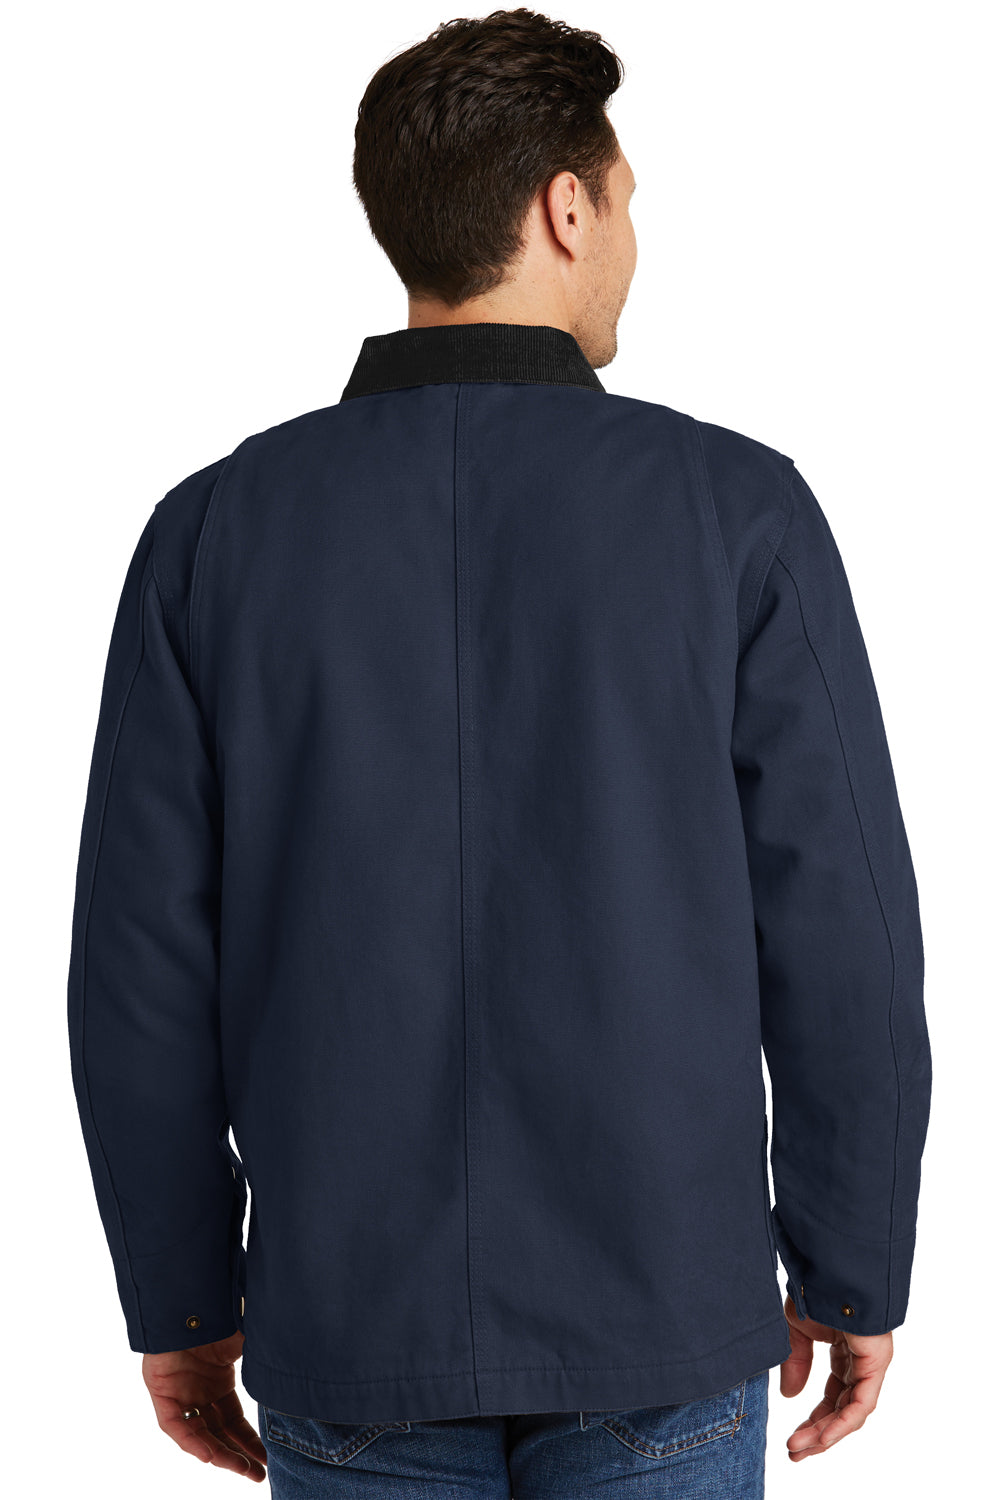 CornerStone CSJ50 Mens Duck Cloth Full Zip Jacket Navy Blue Back